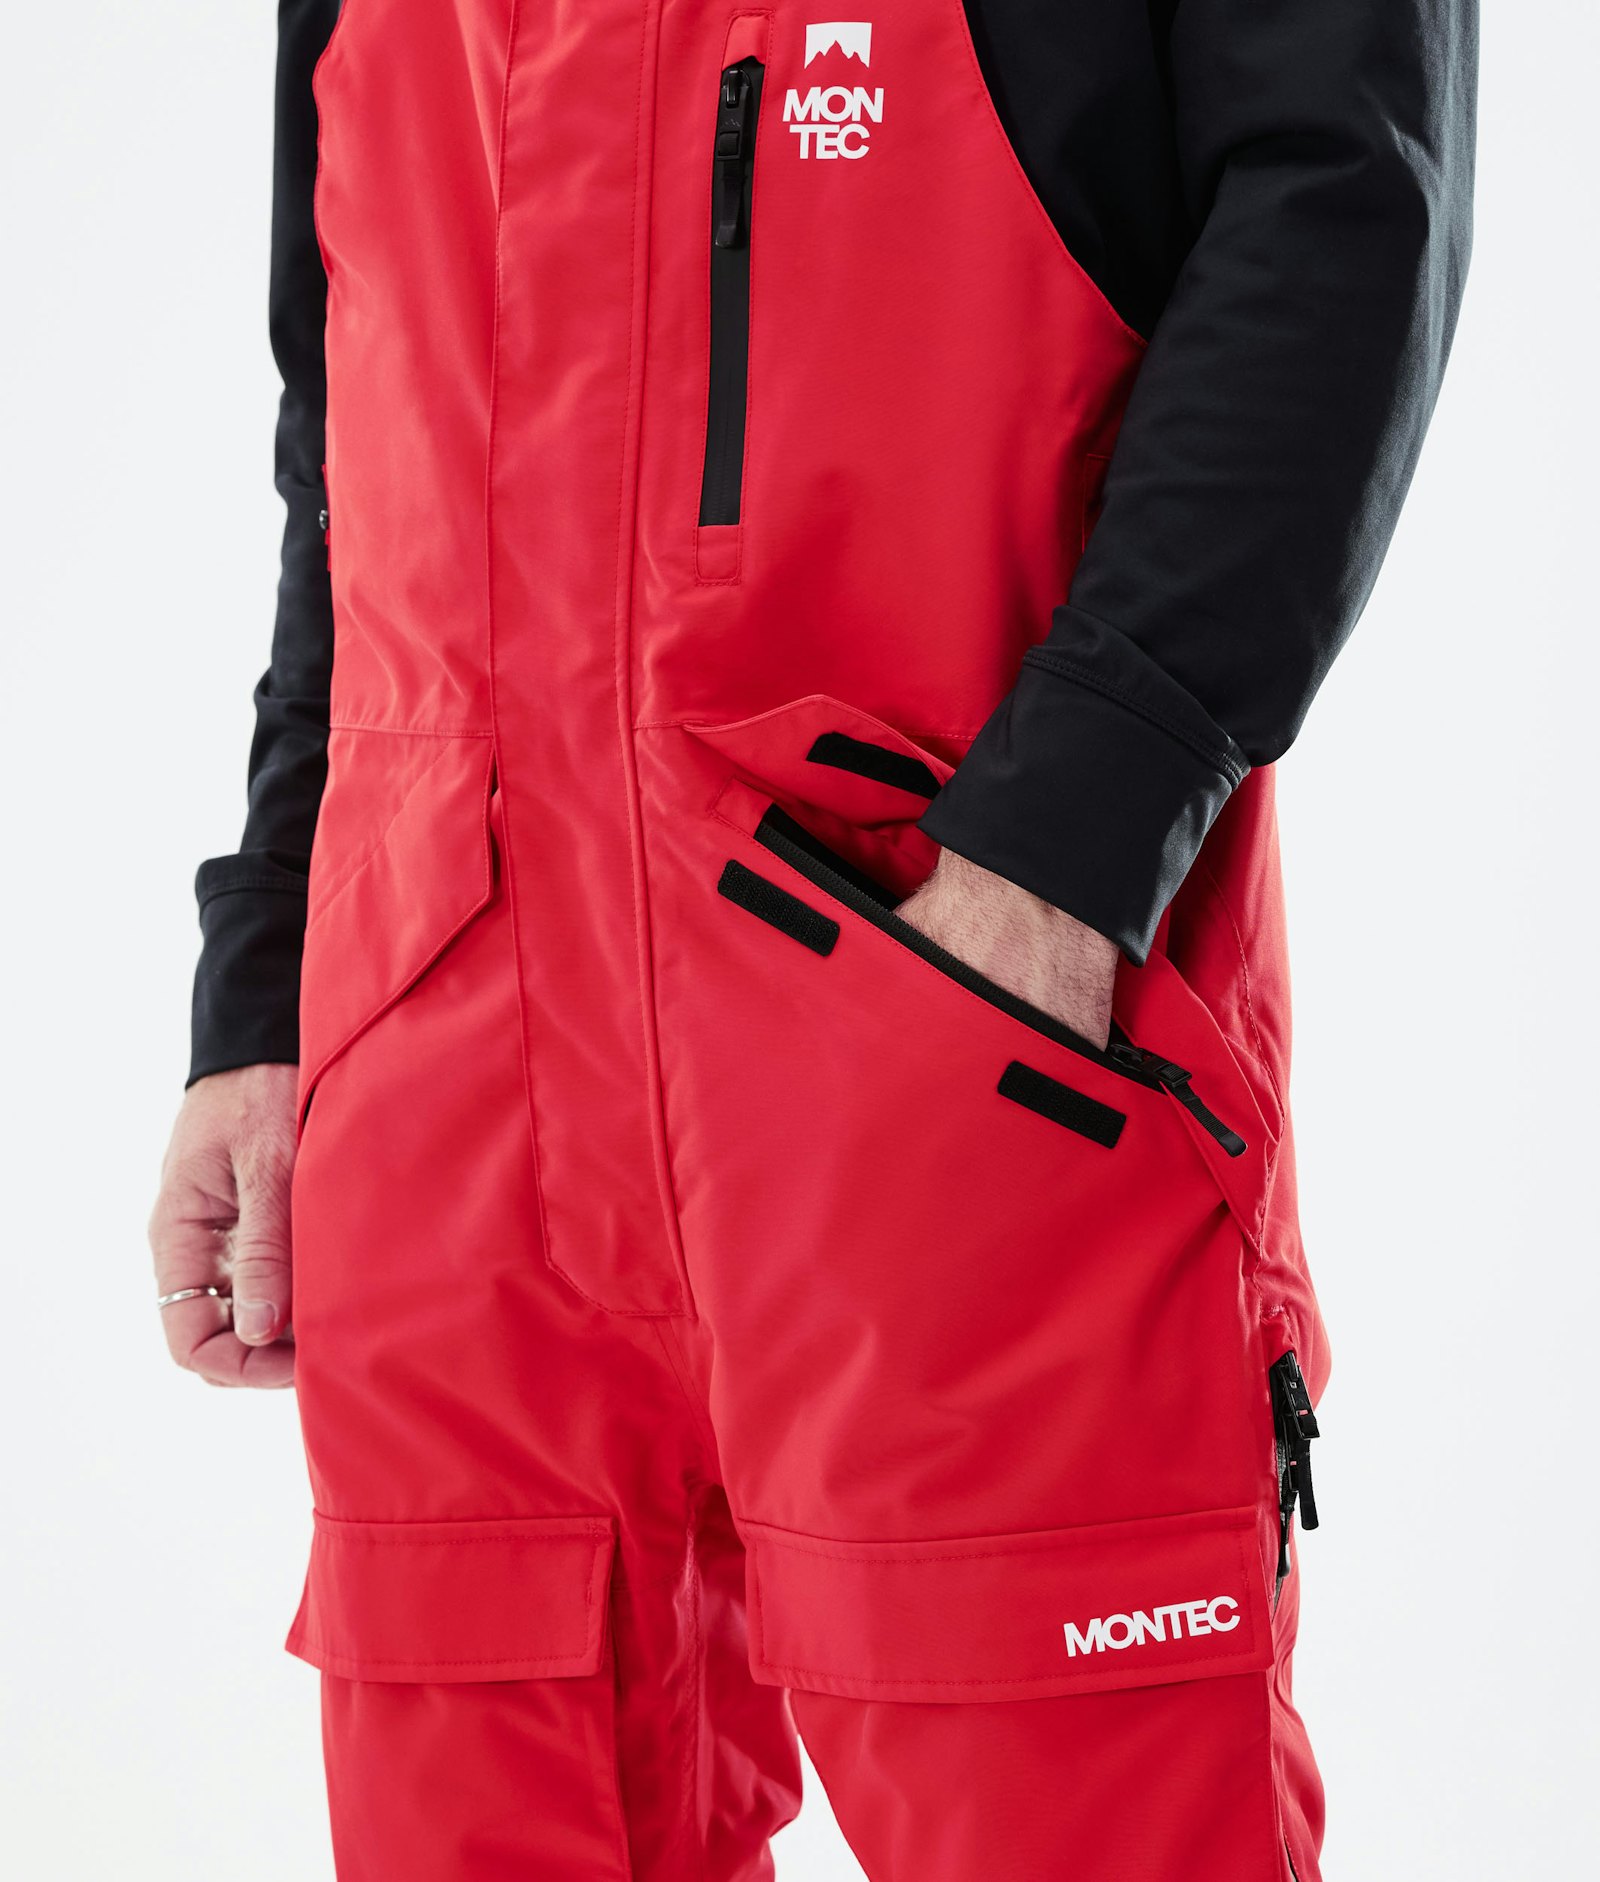 Fawk 2021 Snowboard Pants Men Red Renewed